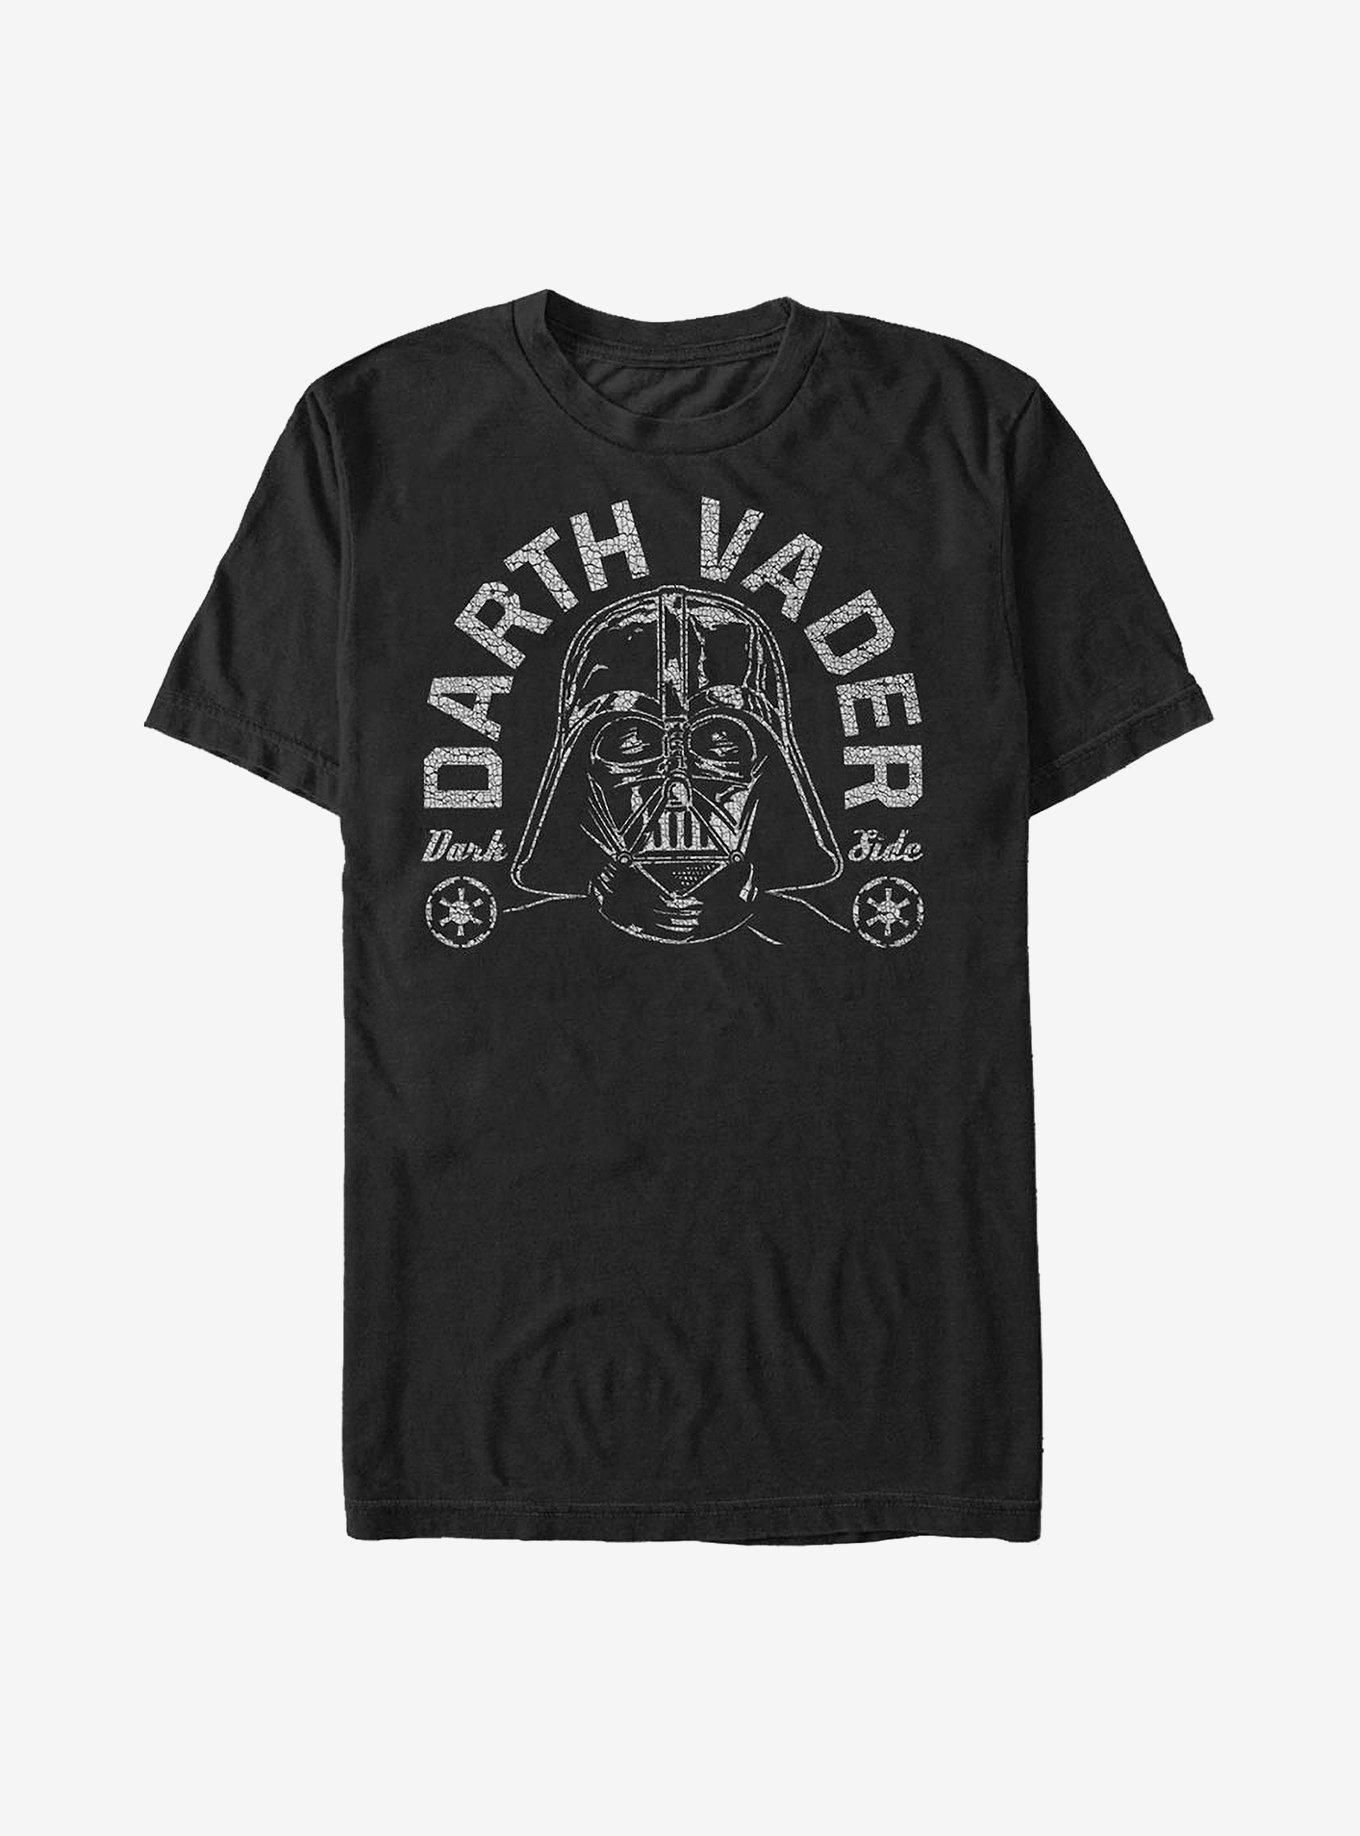 Star Wars Darth Side Crackle T-Shirt